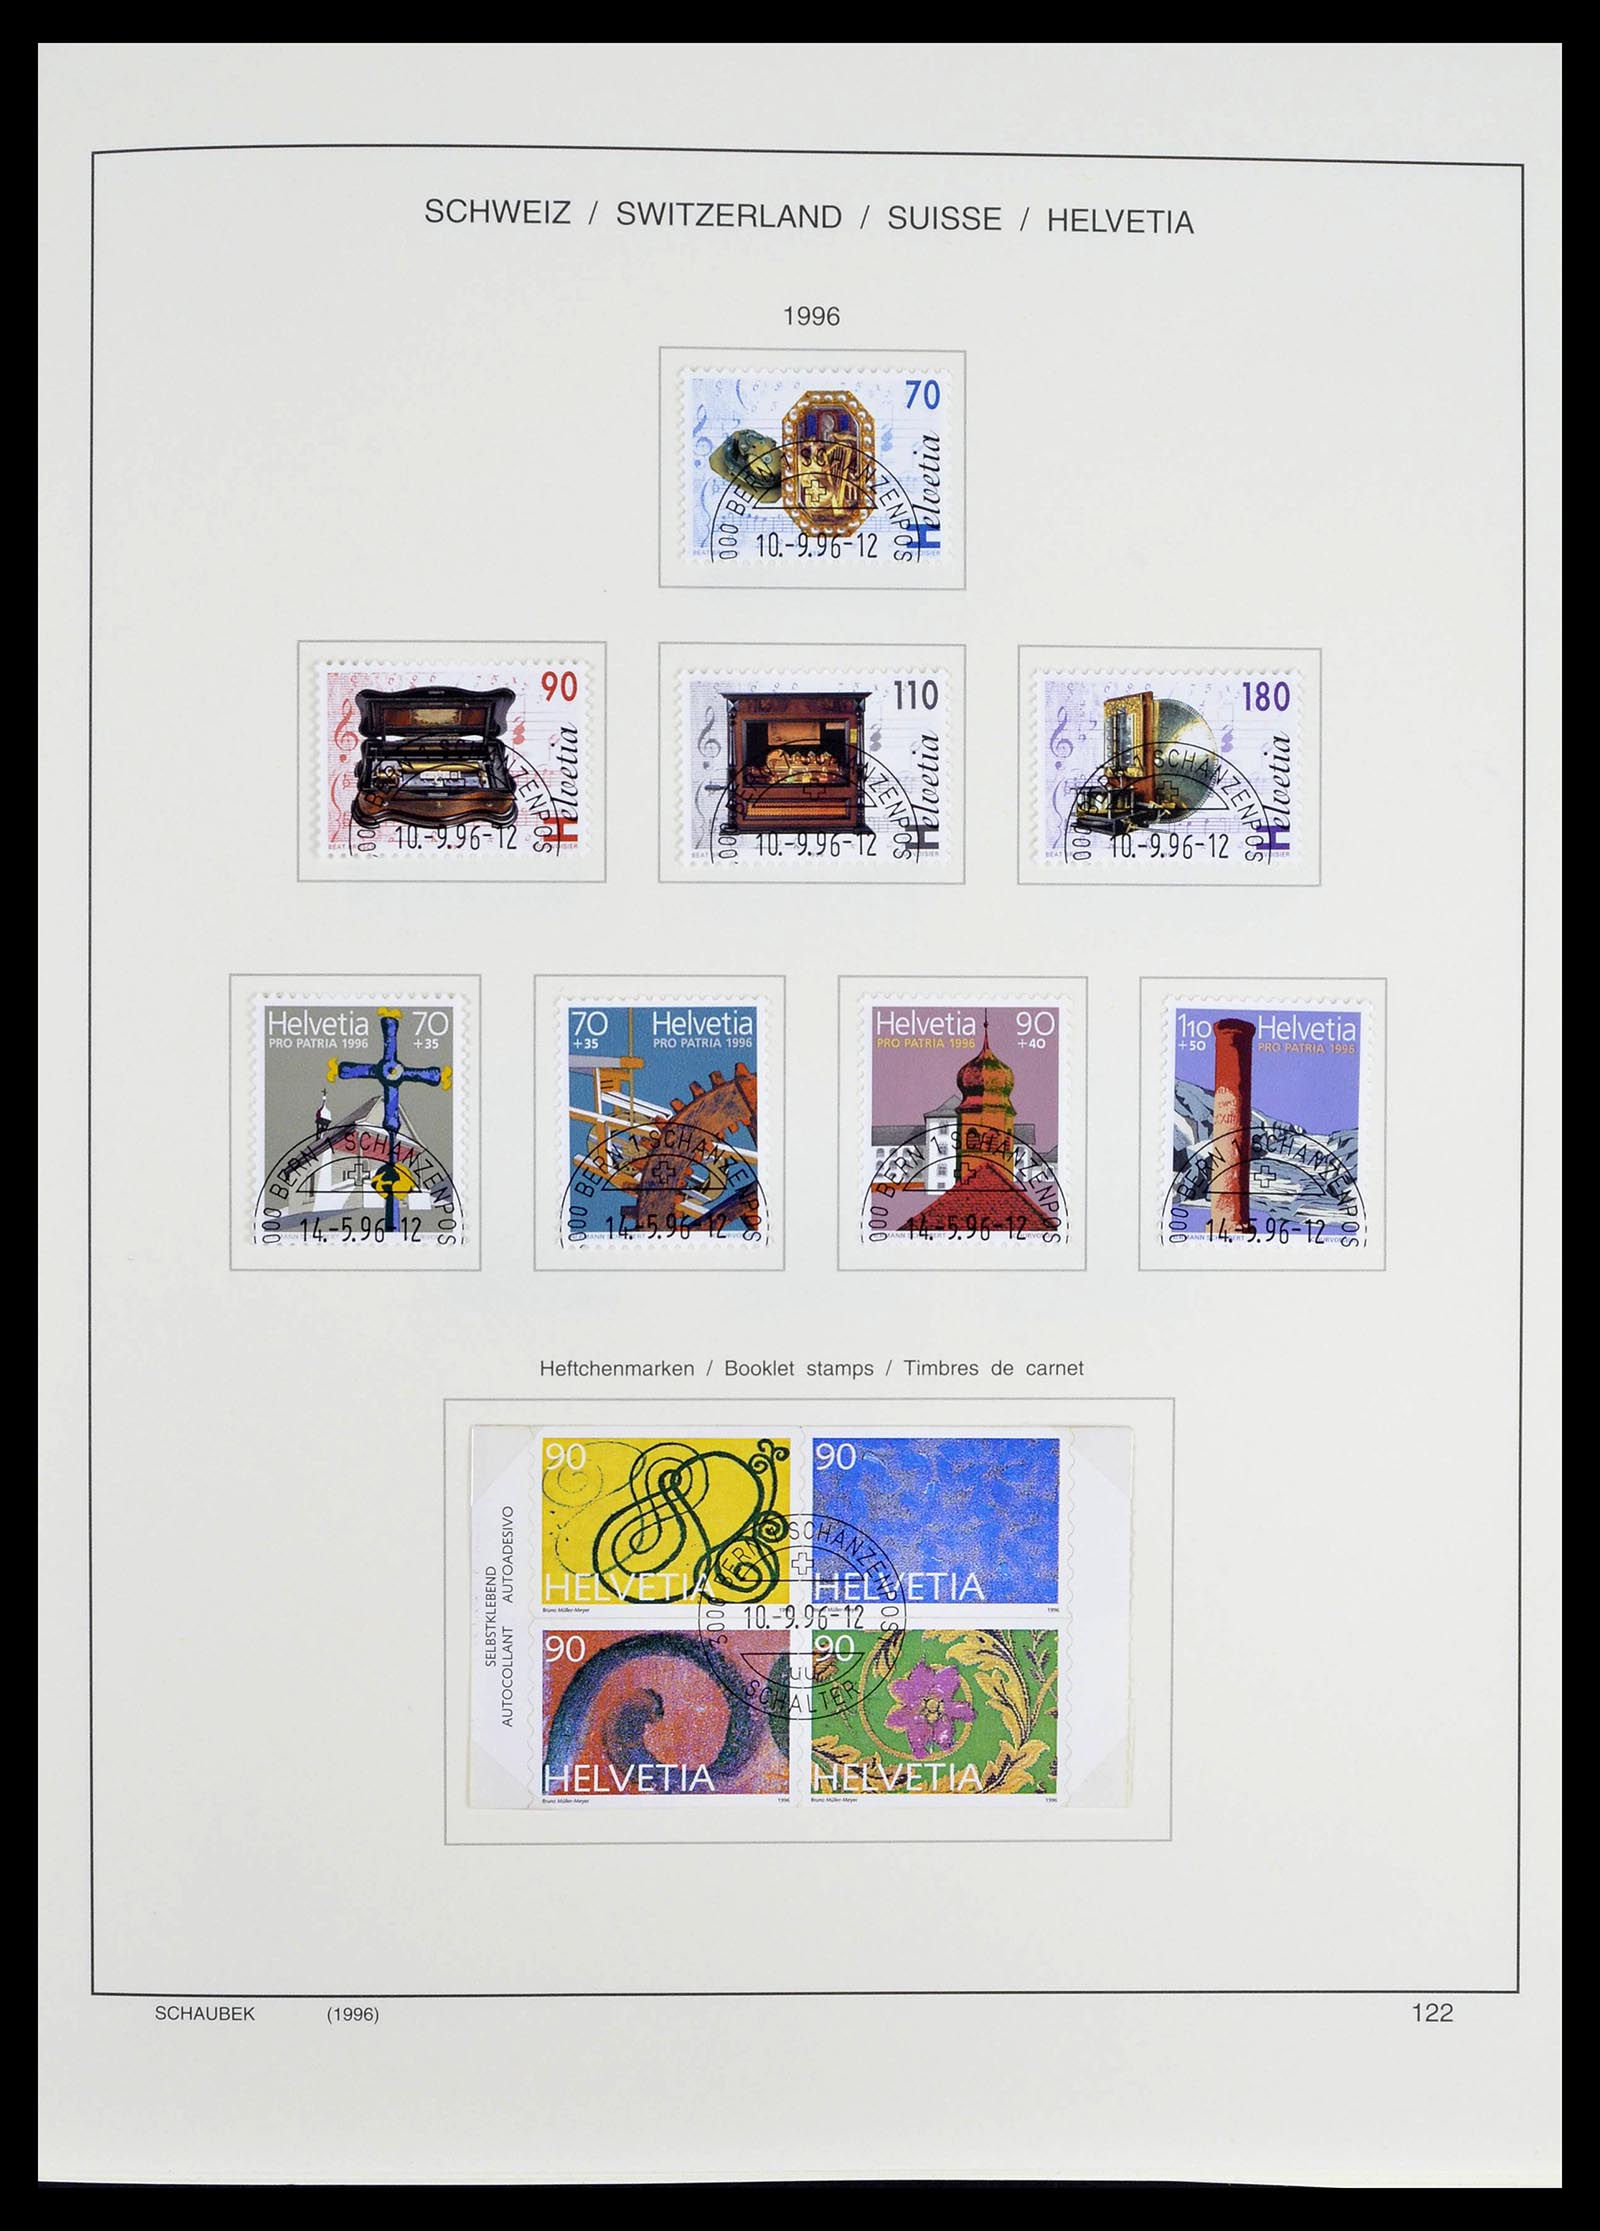 39322 0046 - Stamp collection 39322 Switzerland 1980-2011.